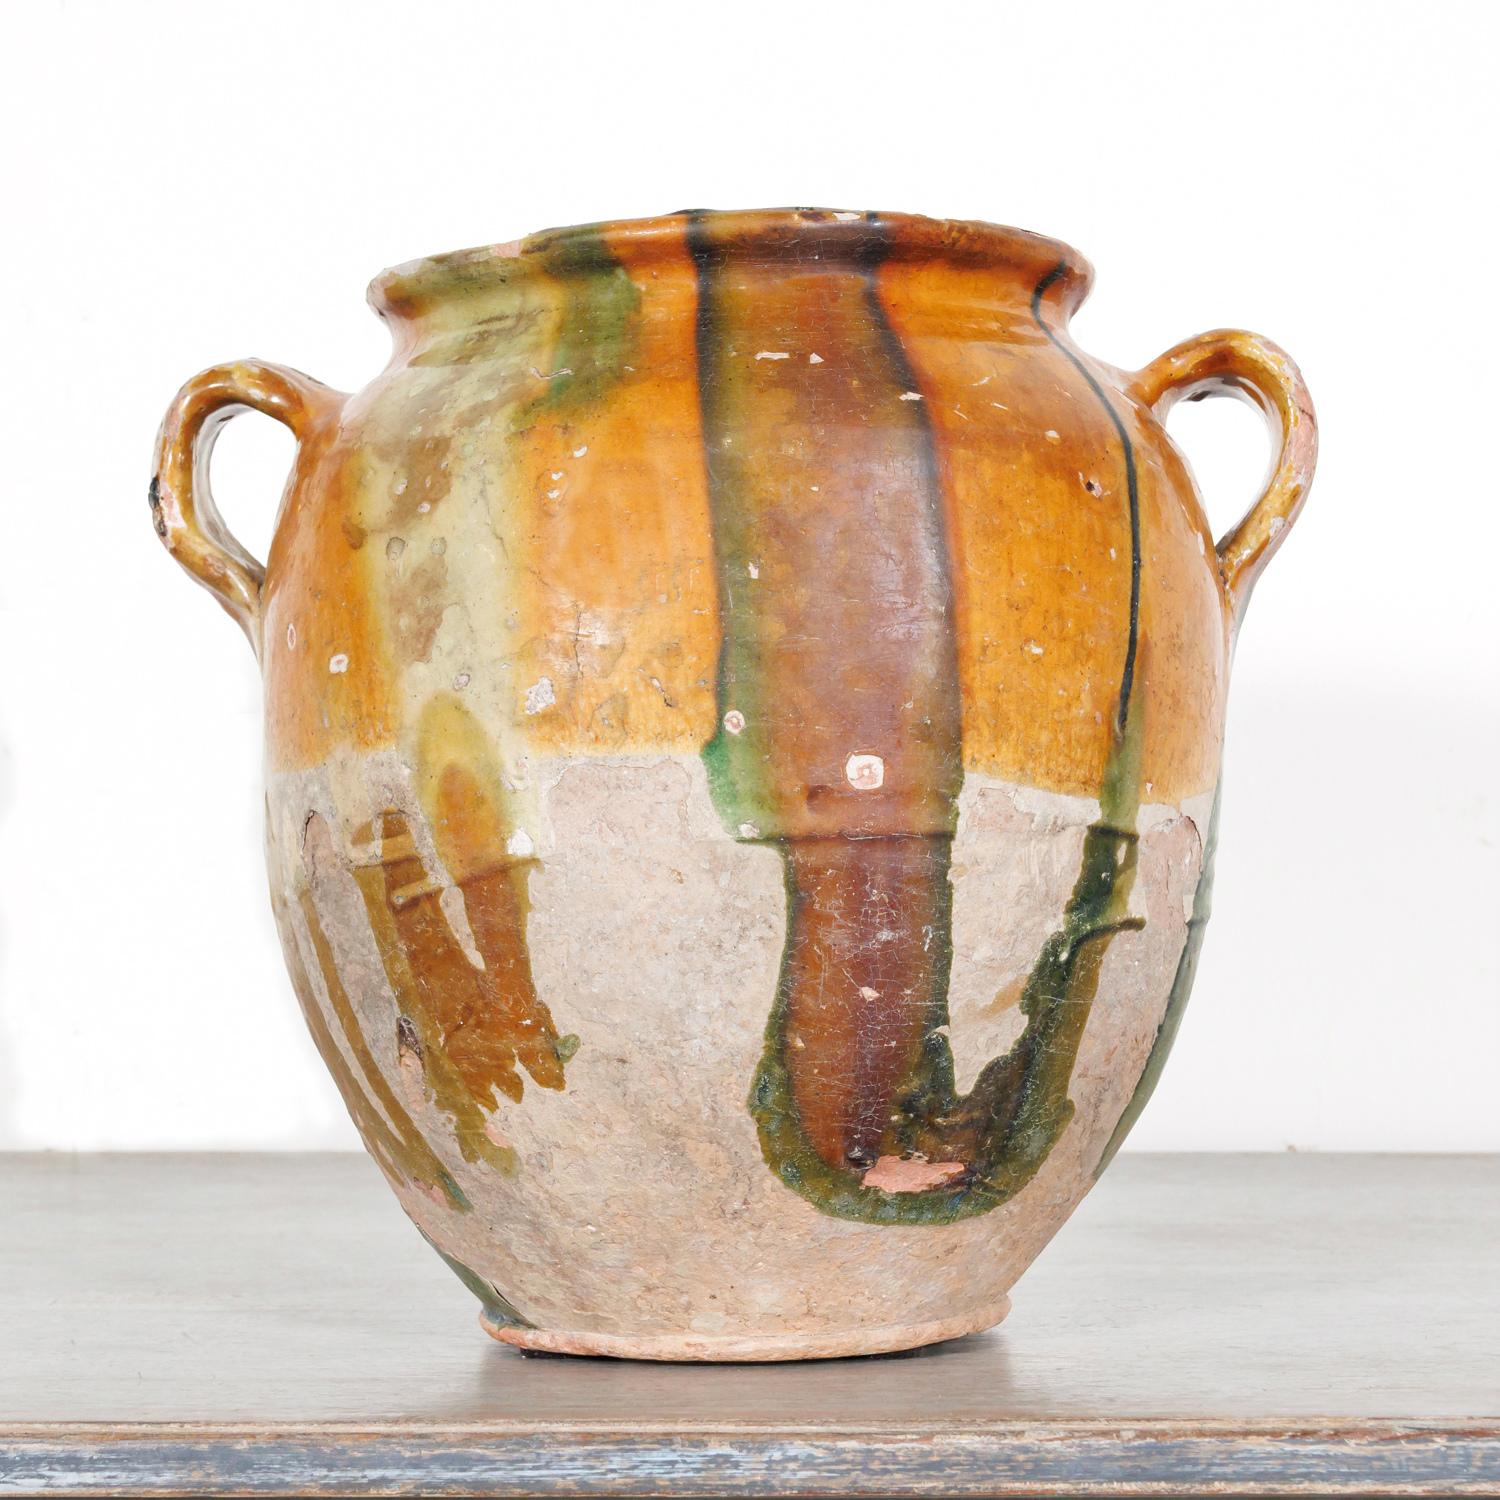 Glazed 19th Century French Confit Pot with Yellow Ochre Glaze w/Green and Caramel Drips